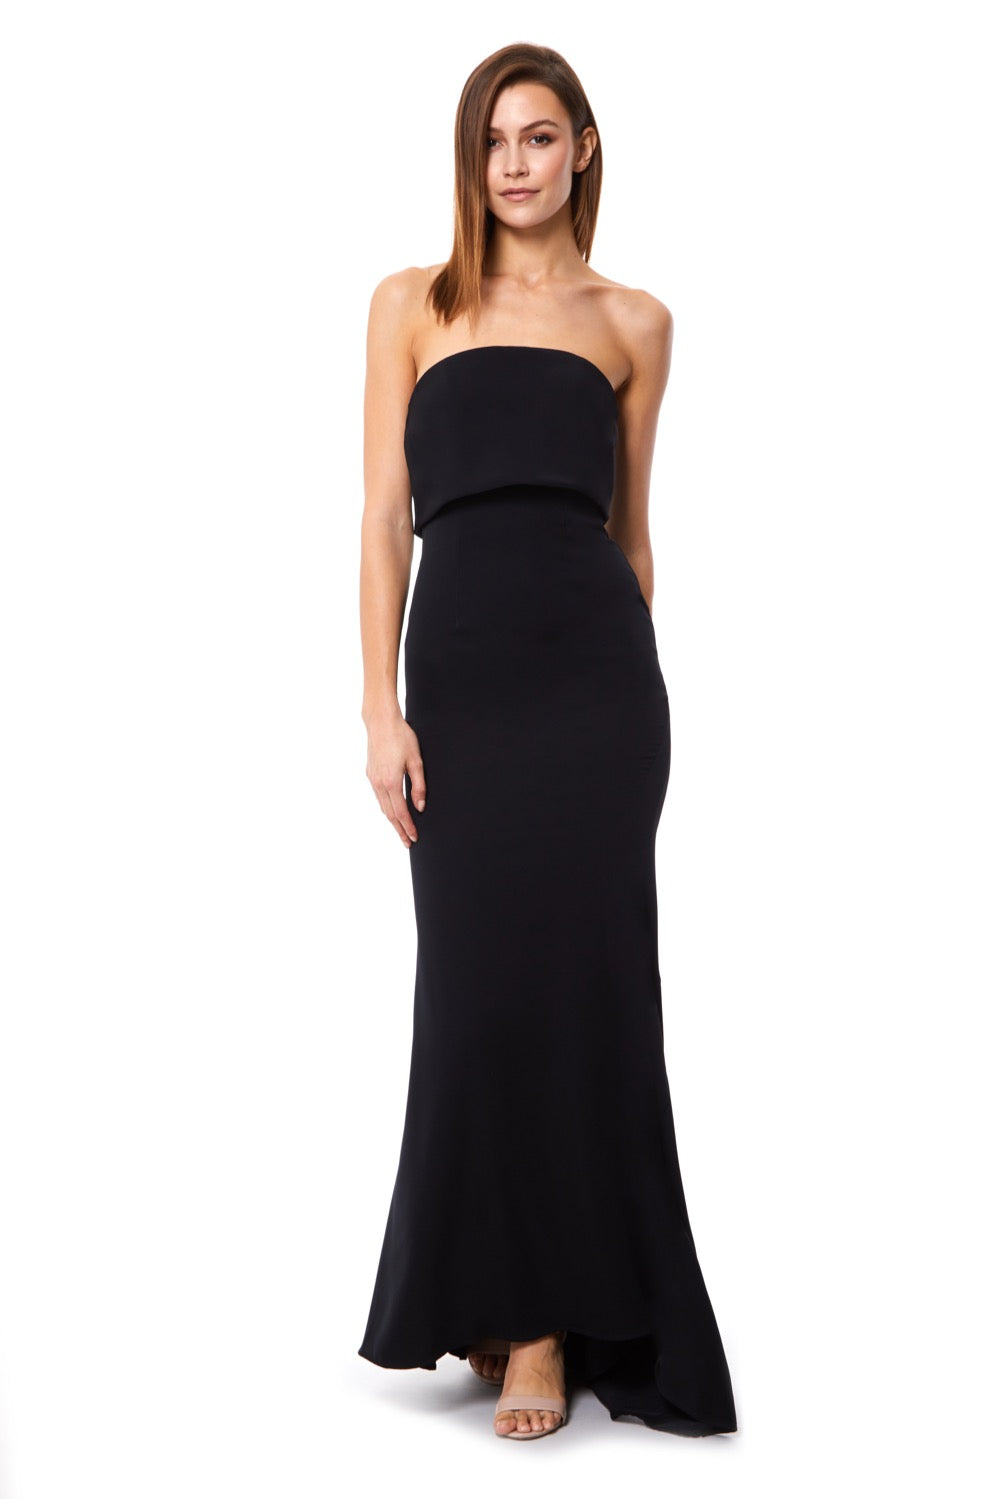 Blaze Strapless Maxi Dress With Overlay, UK 6 / US 2 / EU 34 / Black